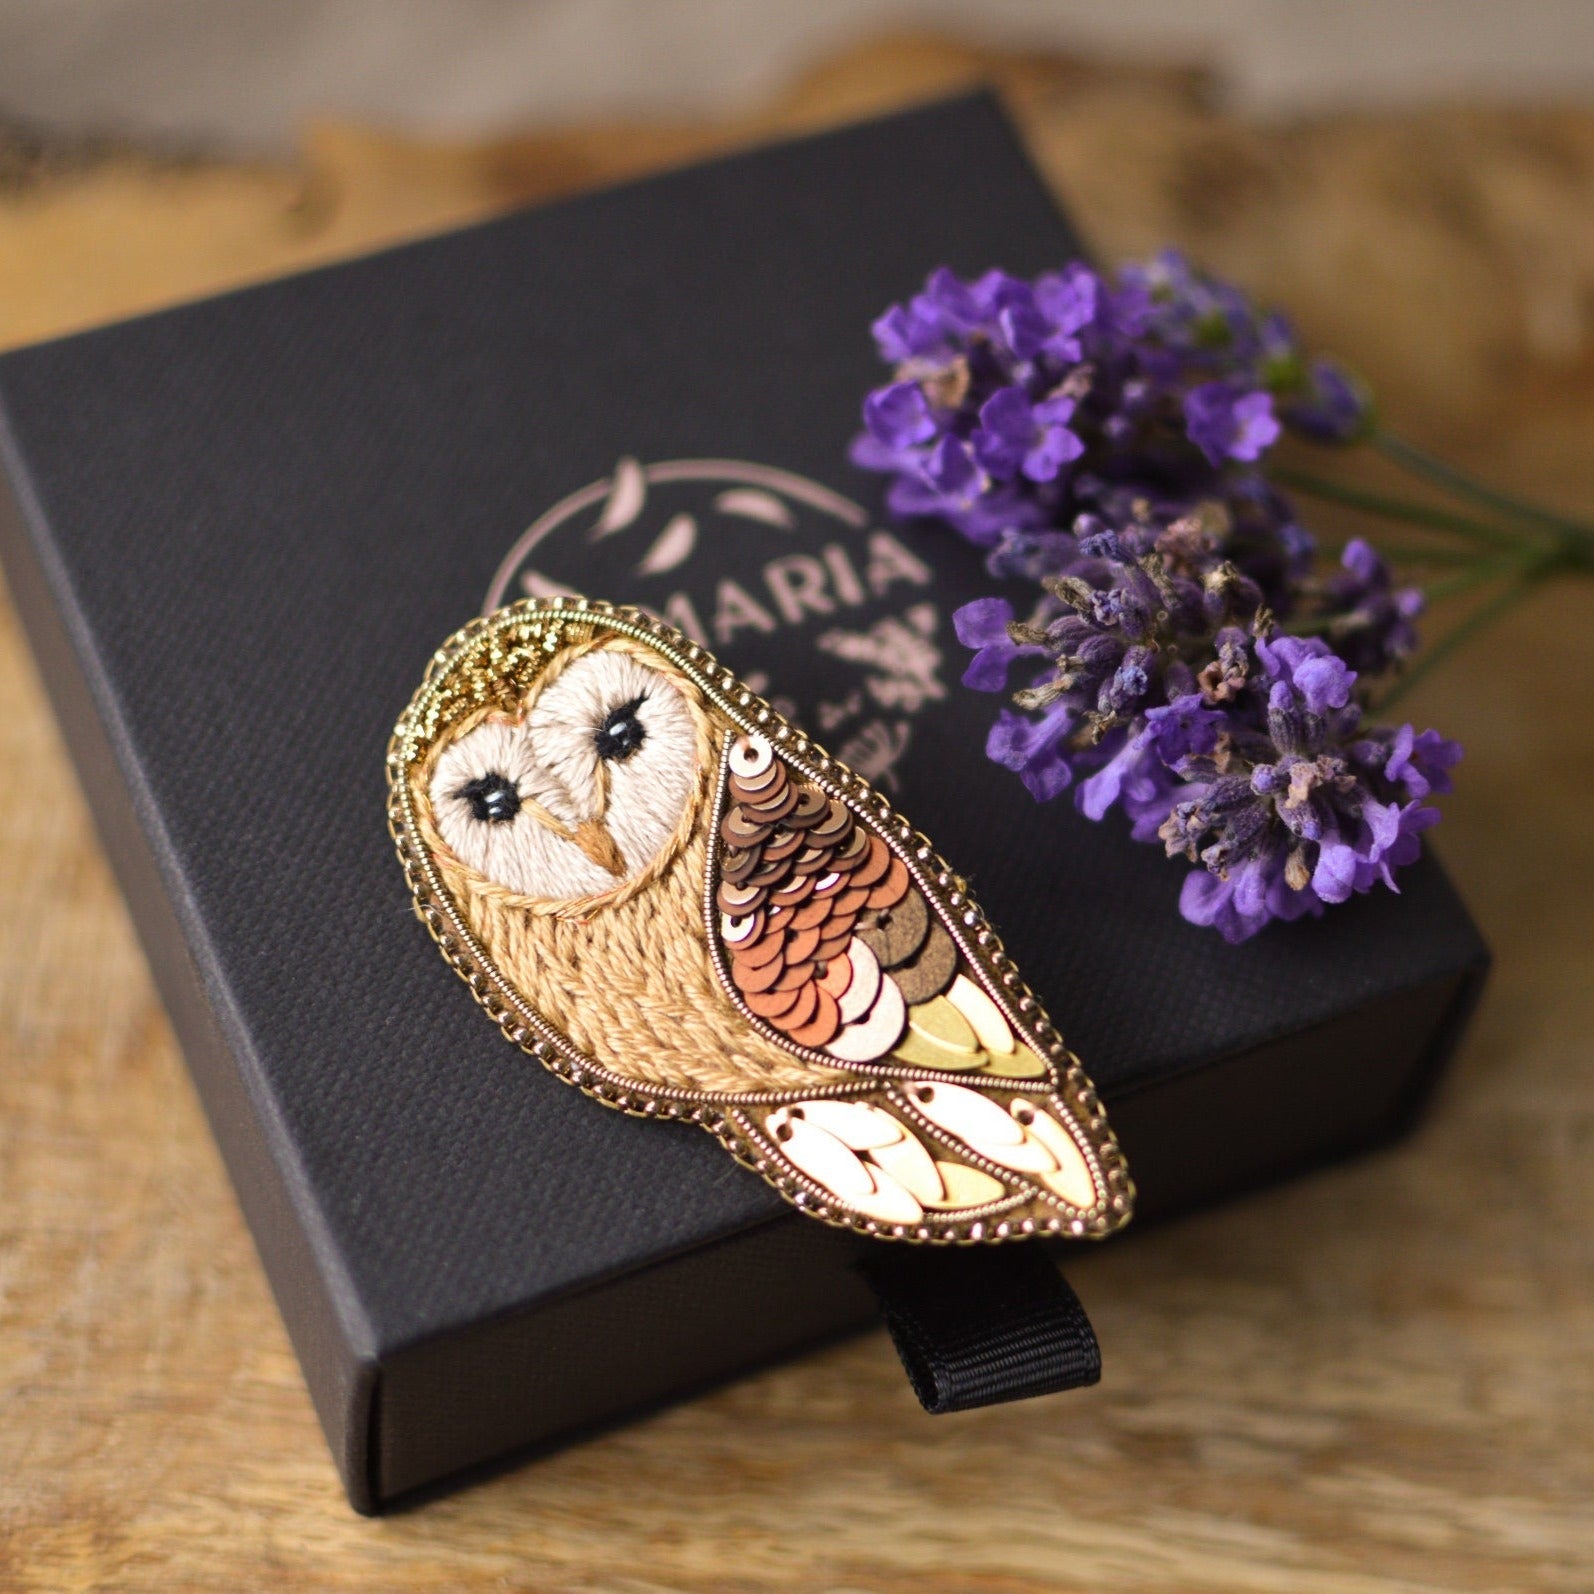 Barn Owl Brooch on Plumaria's  branded jewellery box